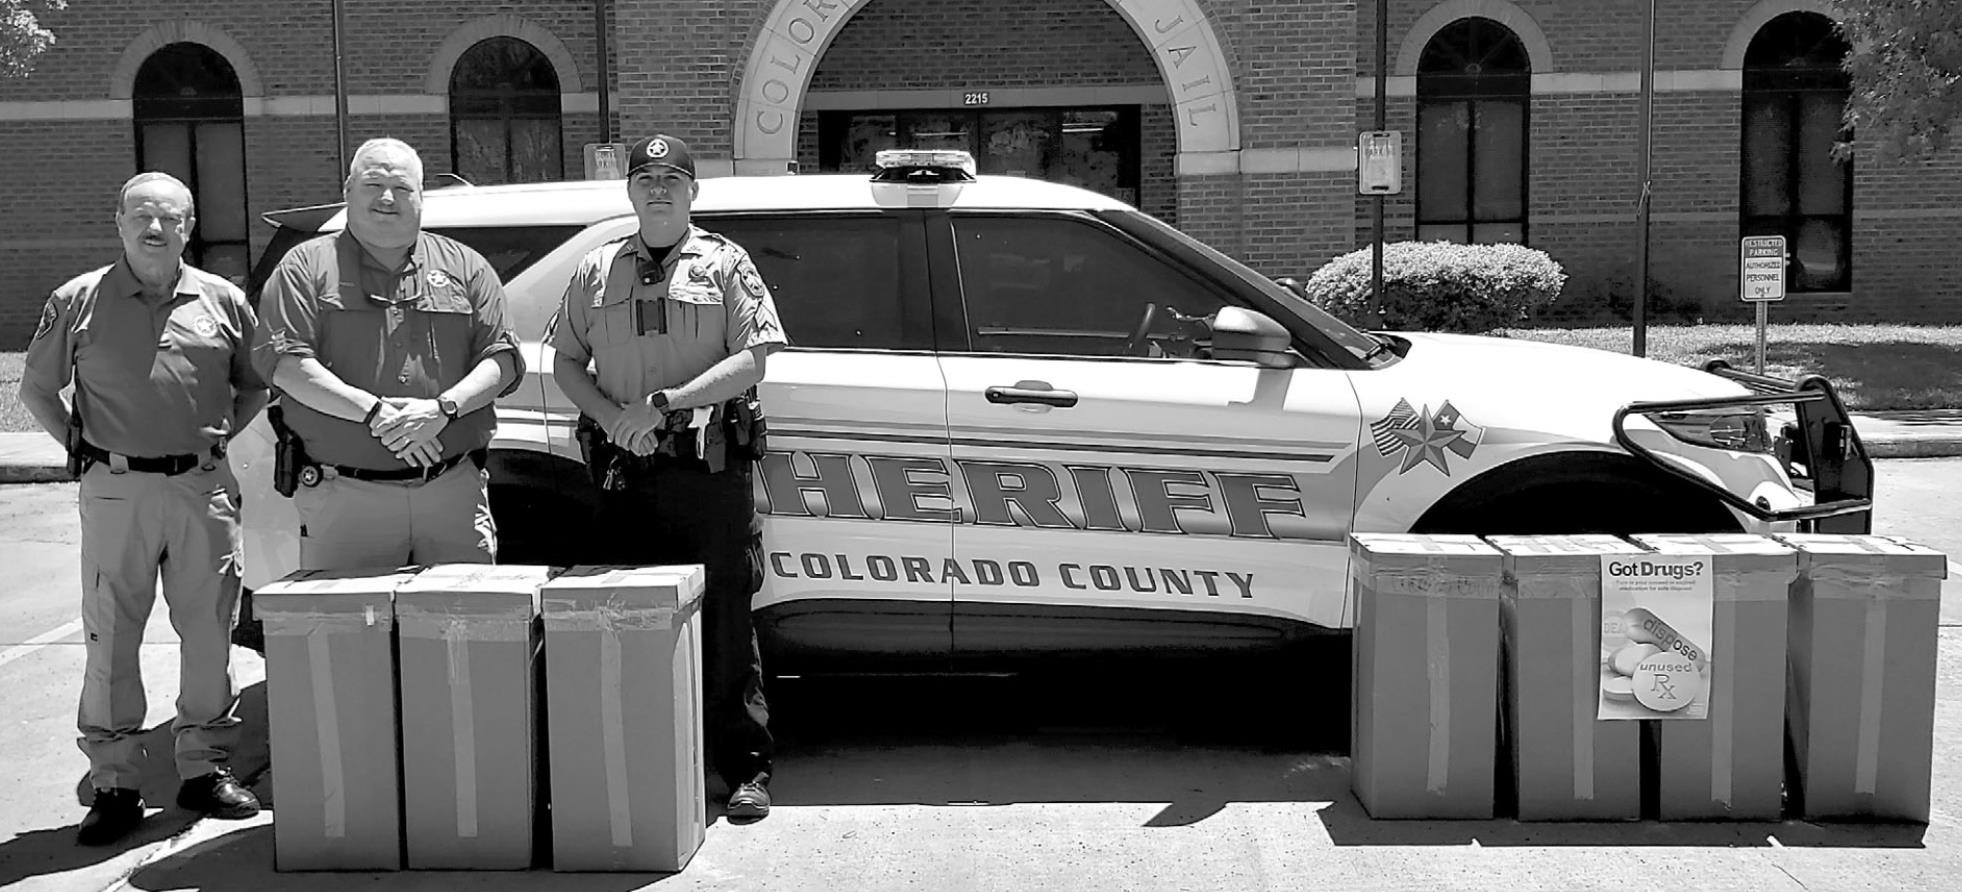 Colorado County Sheriff’s Office Take Back Day successful | Colorado